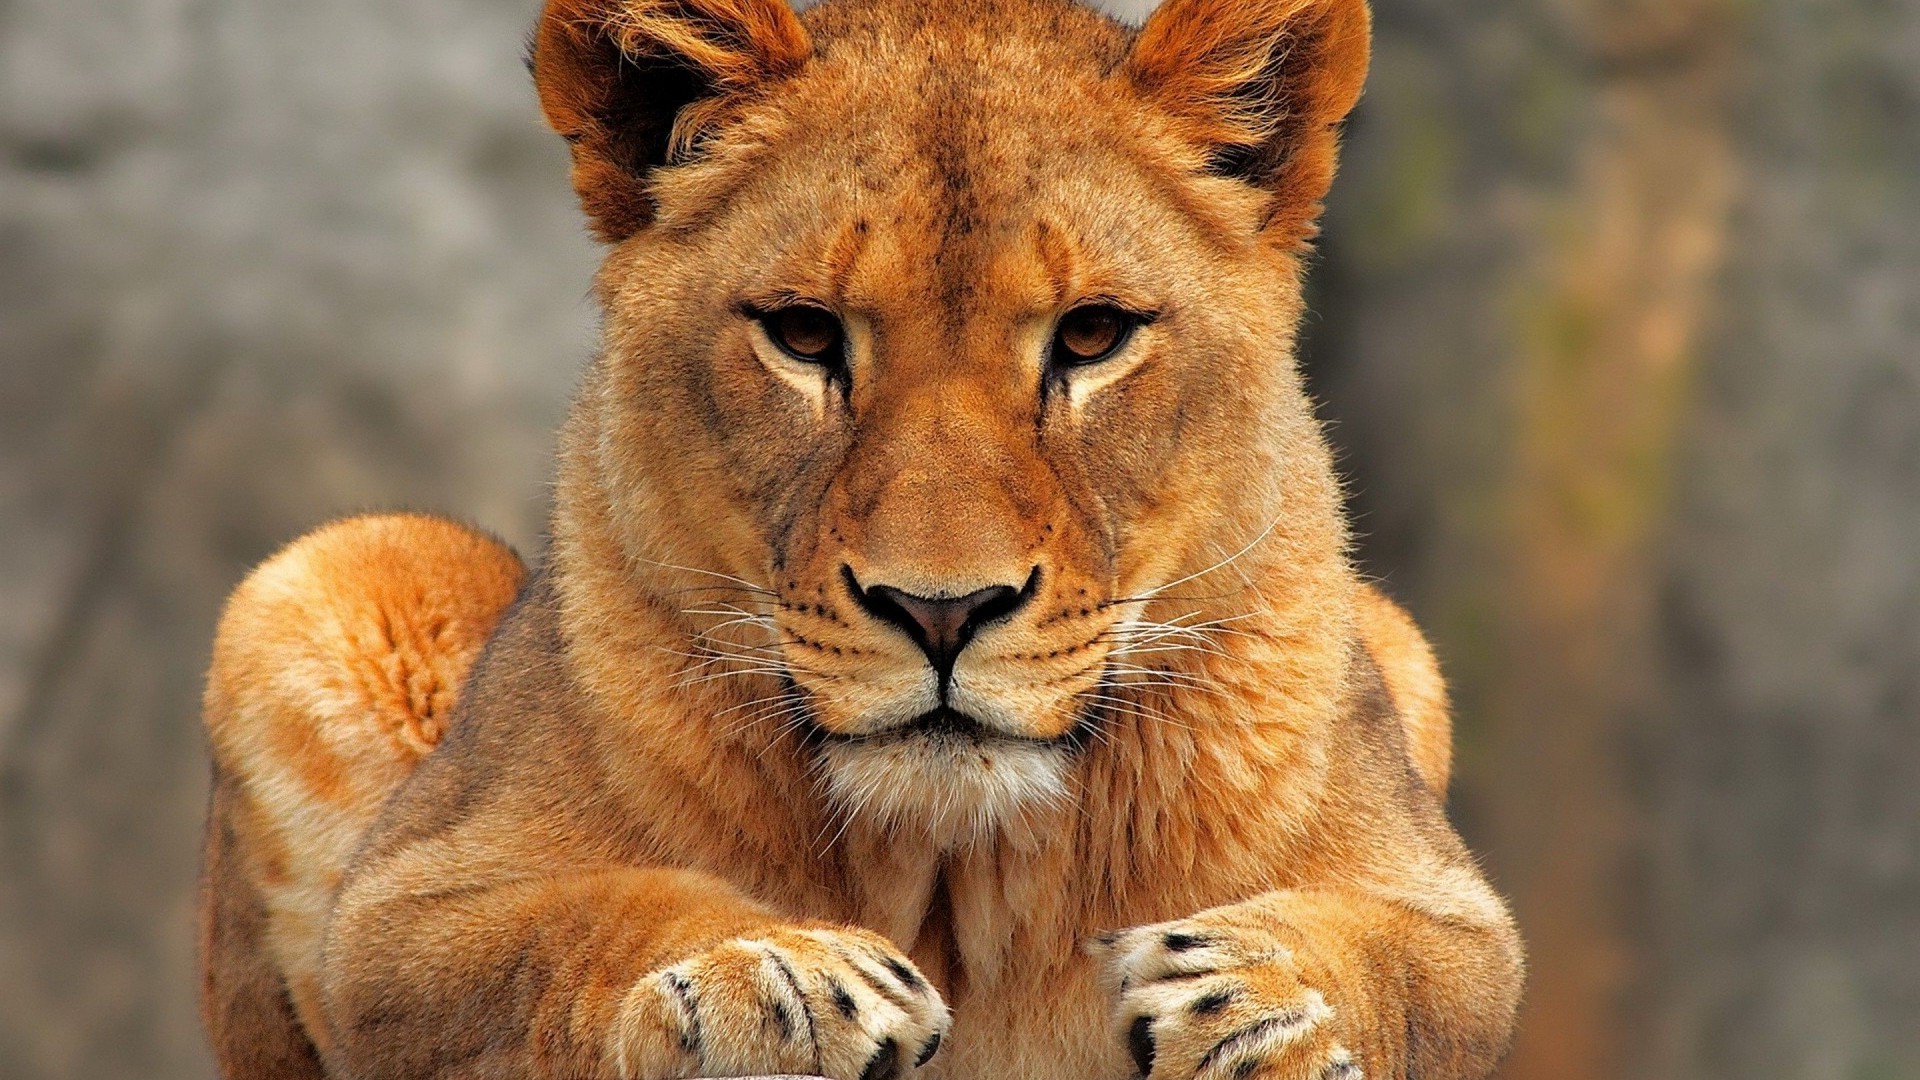 Lioness in closeup photo